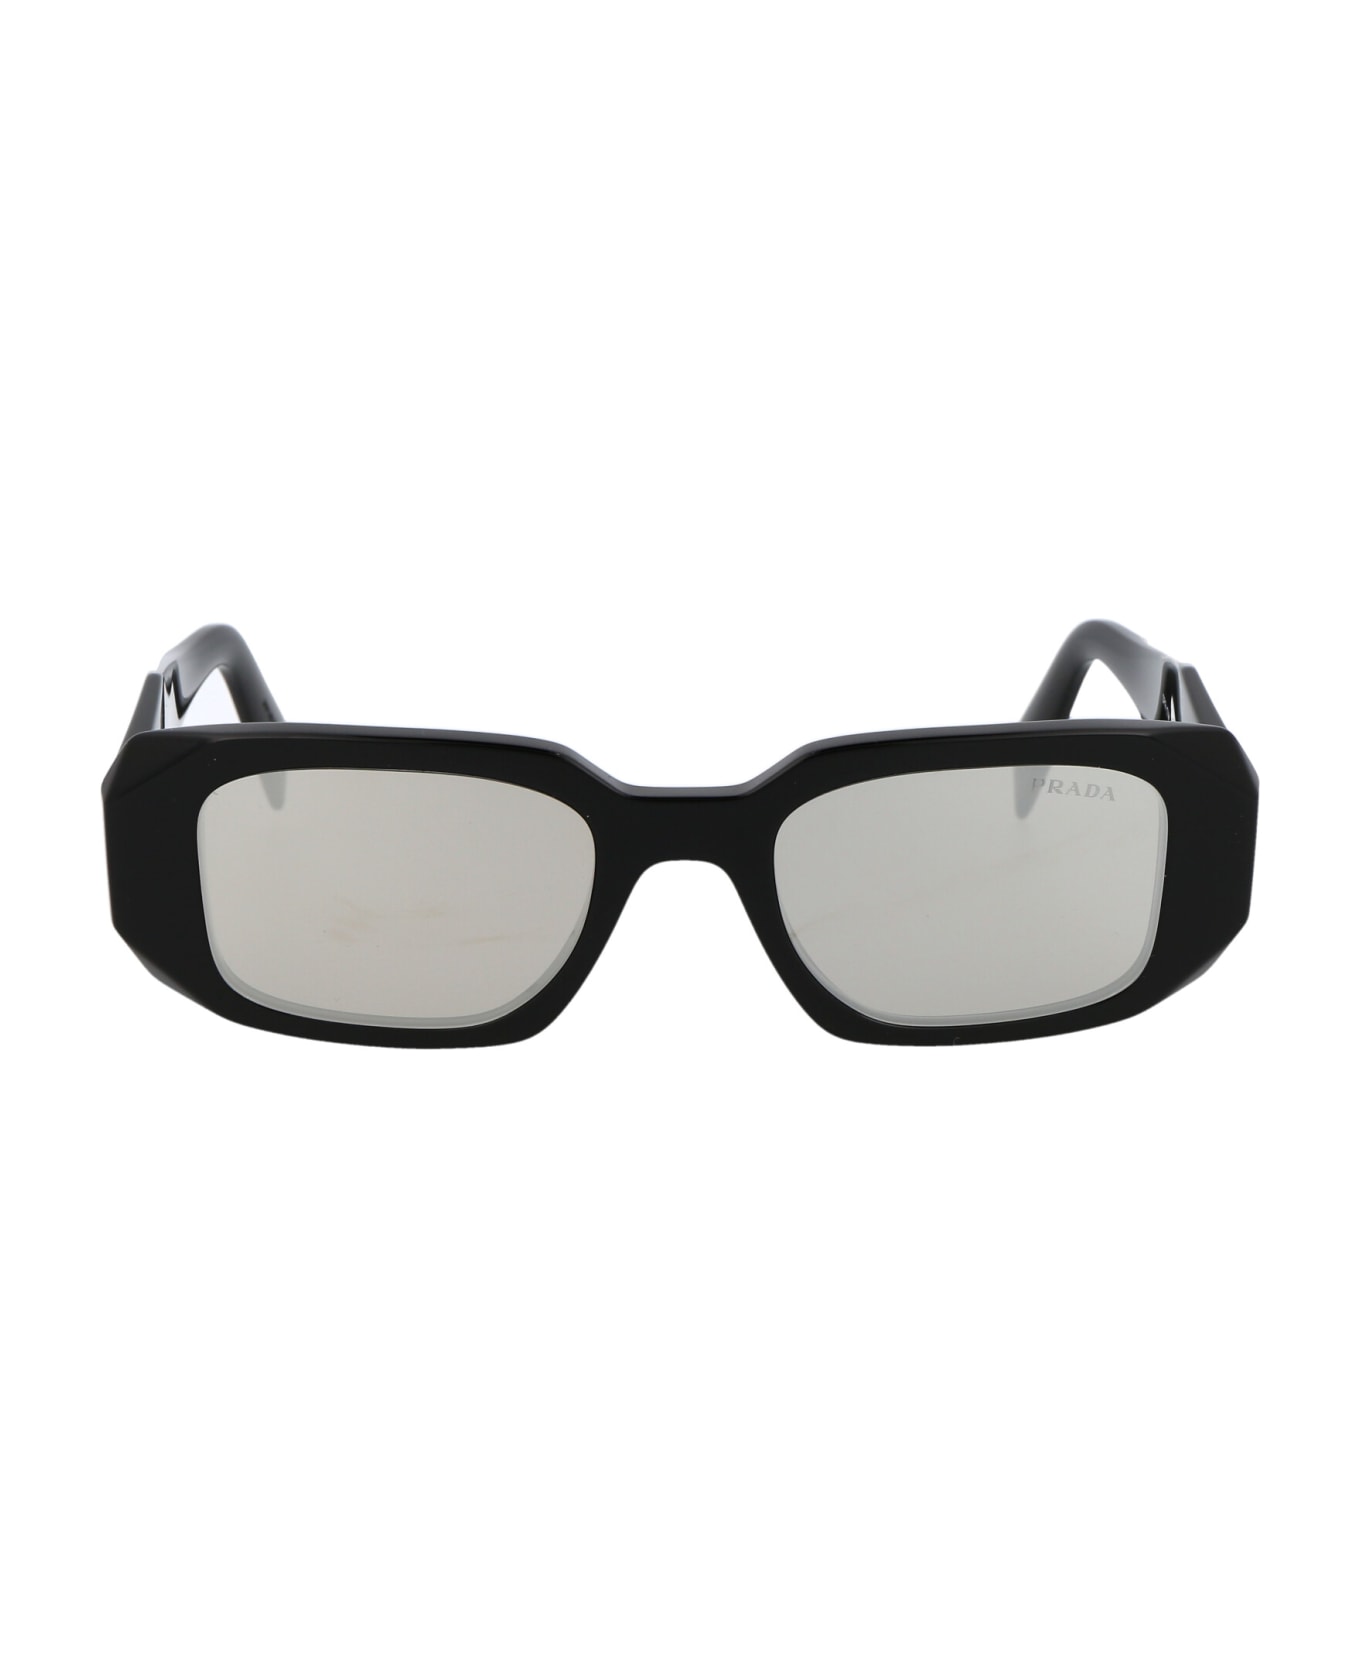 Prada Eyewear 0pr 17ws Sunglasses - 1AB2B0 BLACK